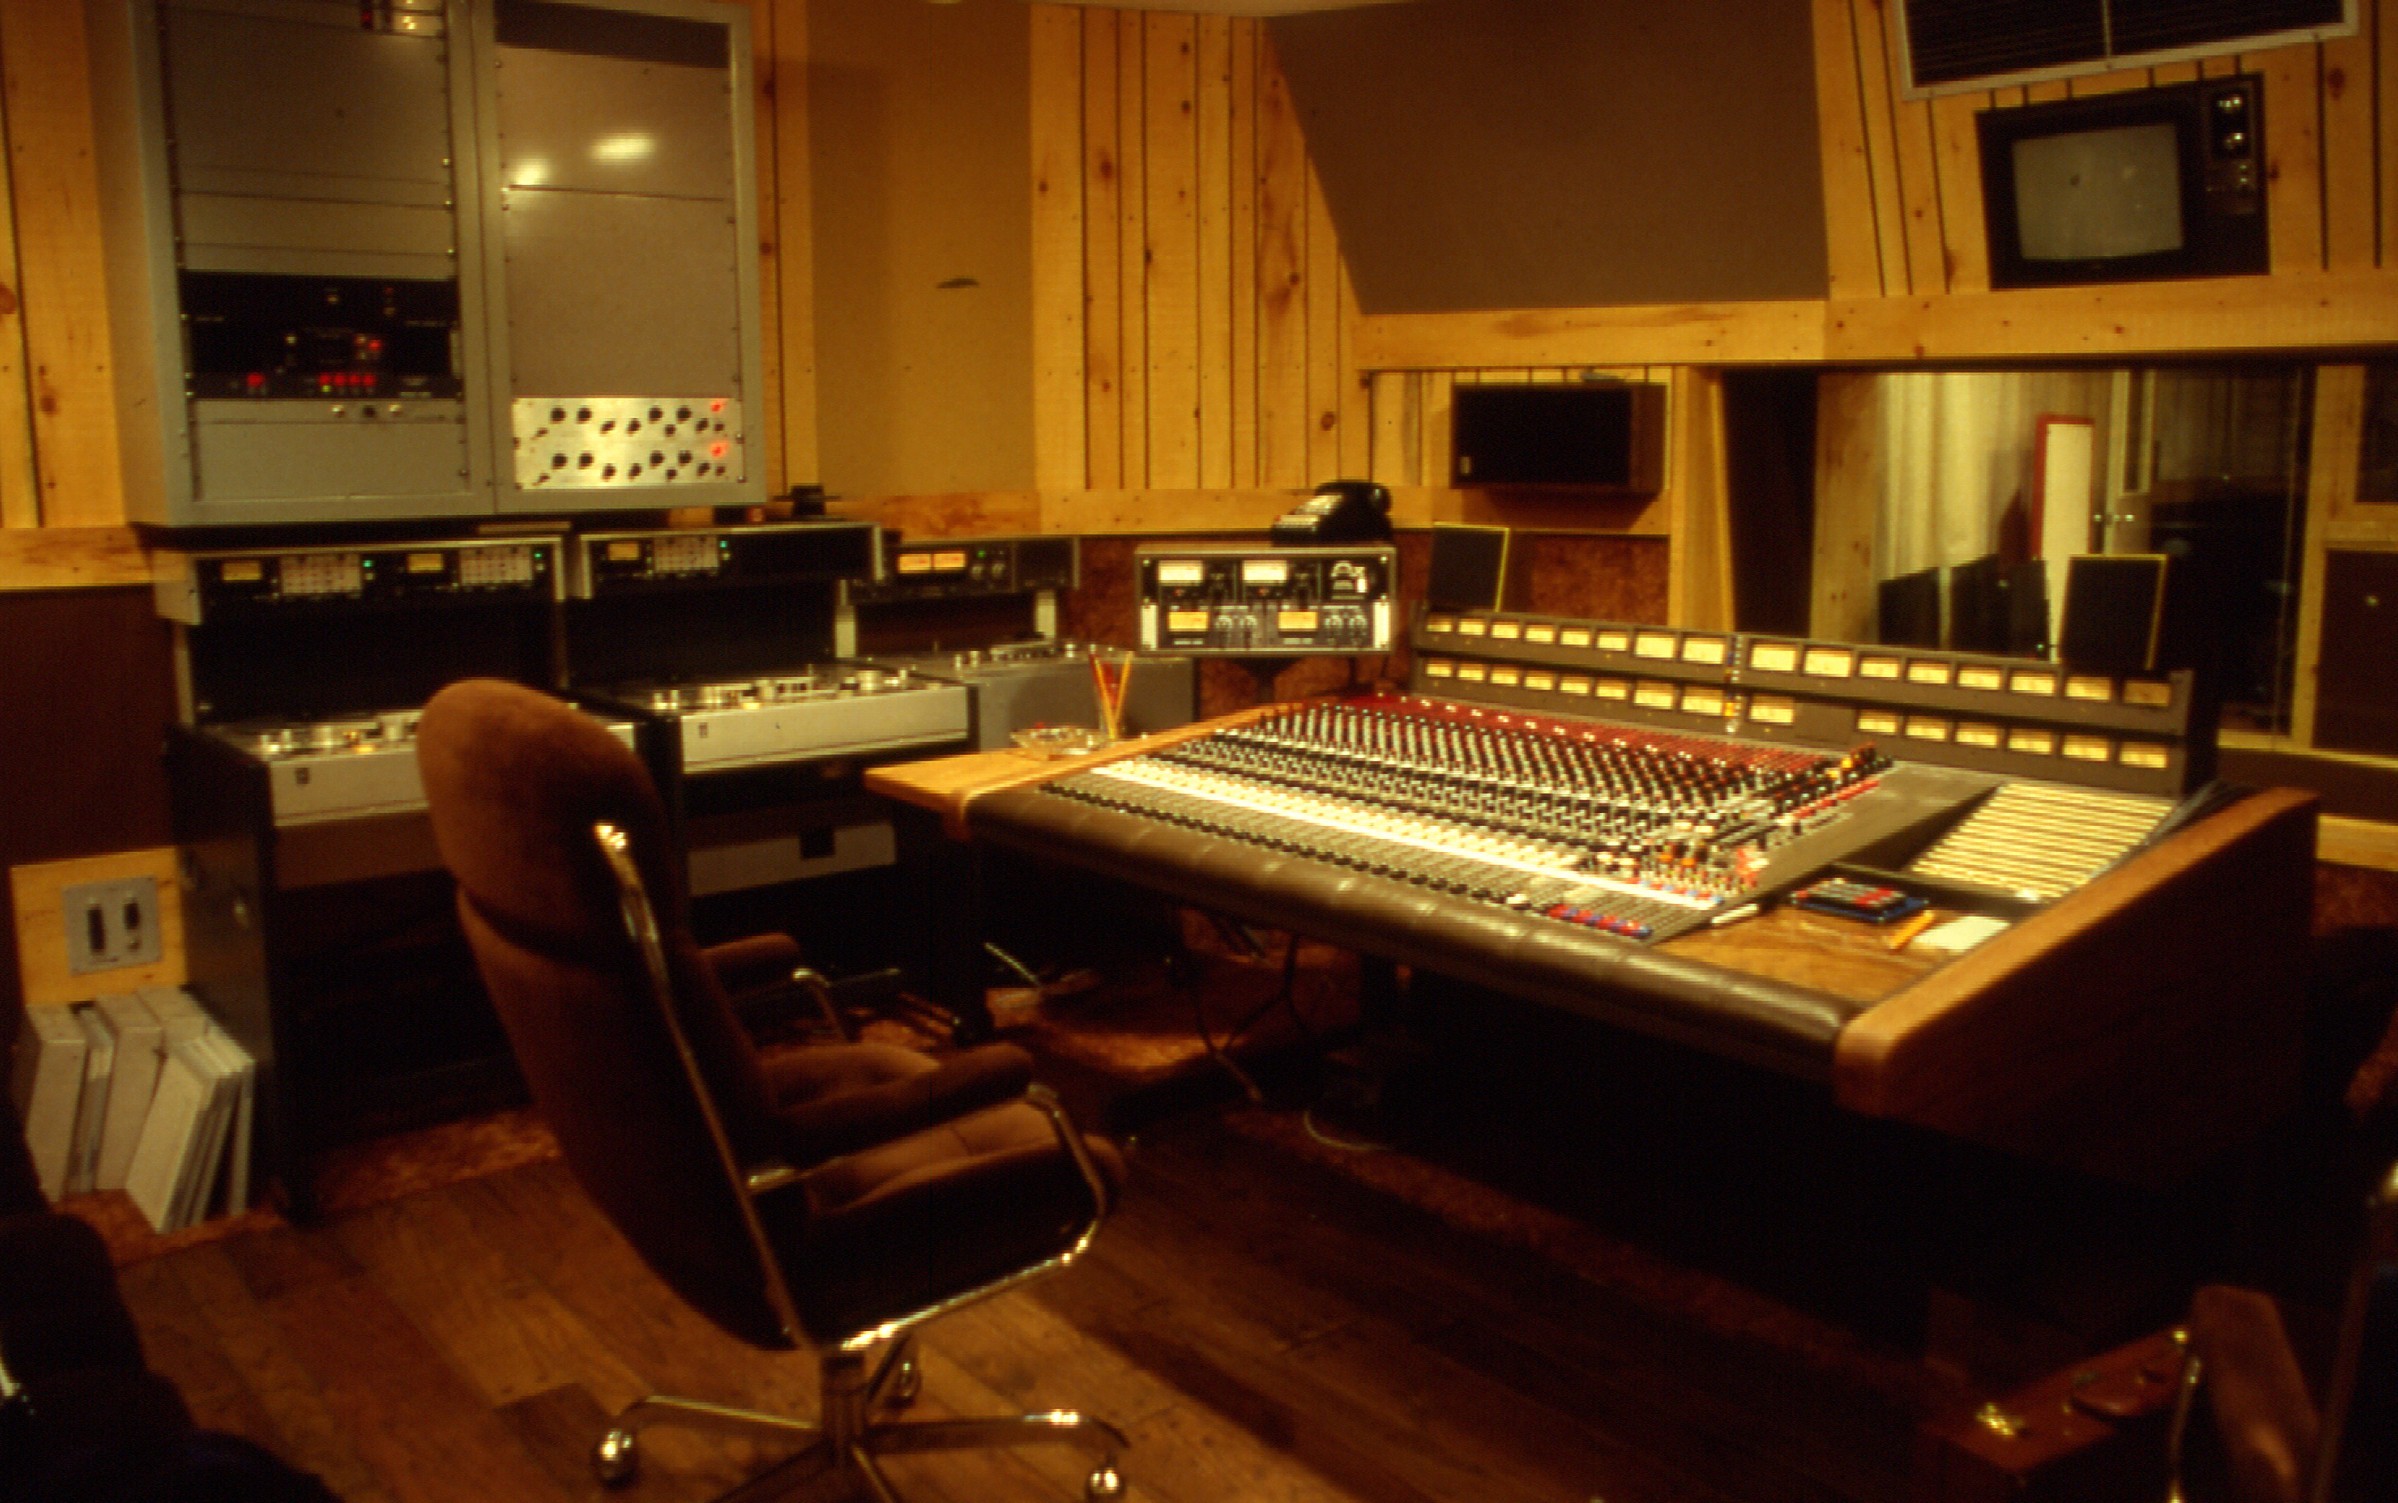 File:Manta Sound Studio 3 (1983).jpg - Wikimedia Commons